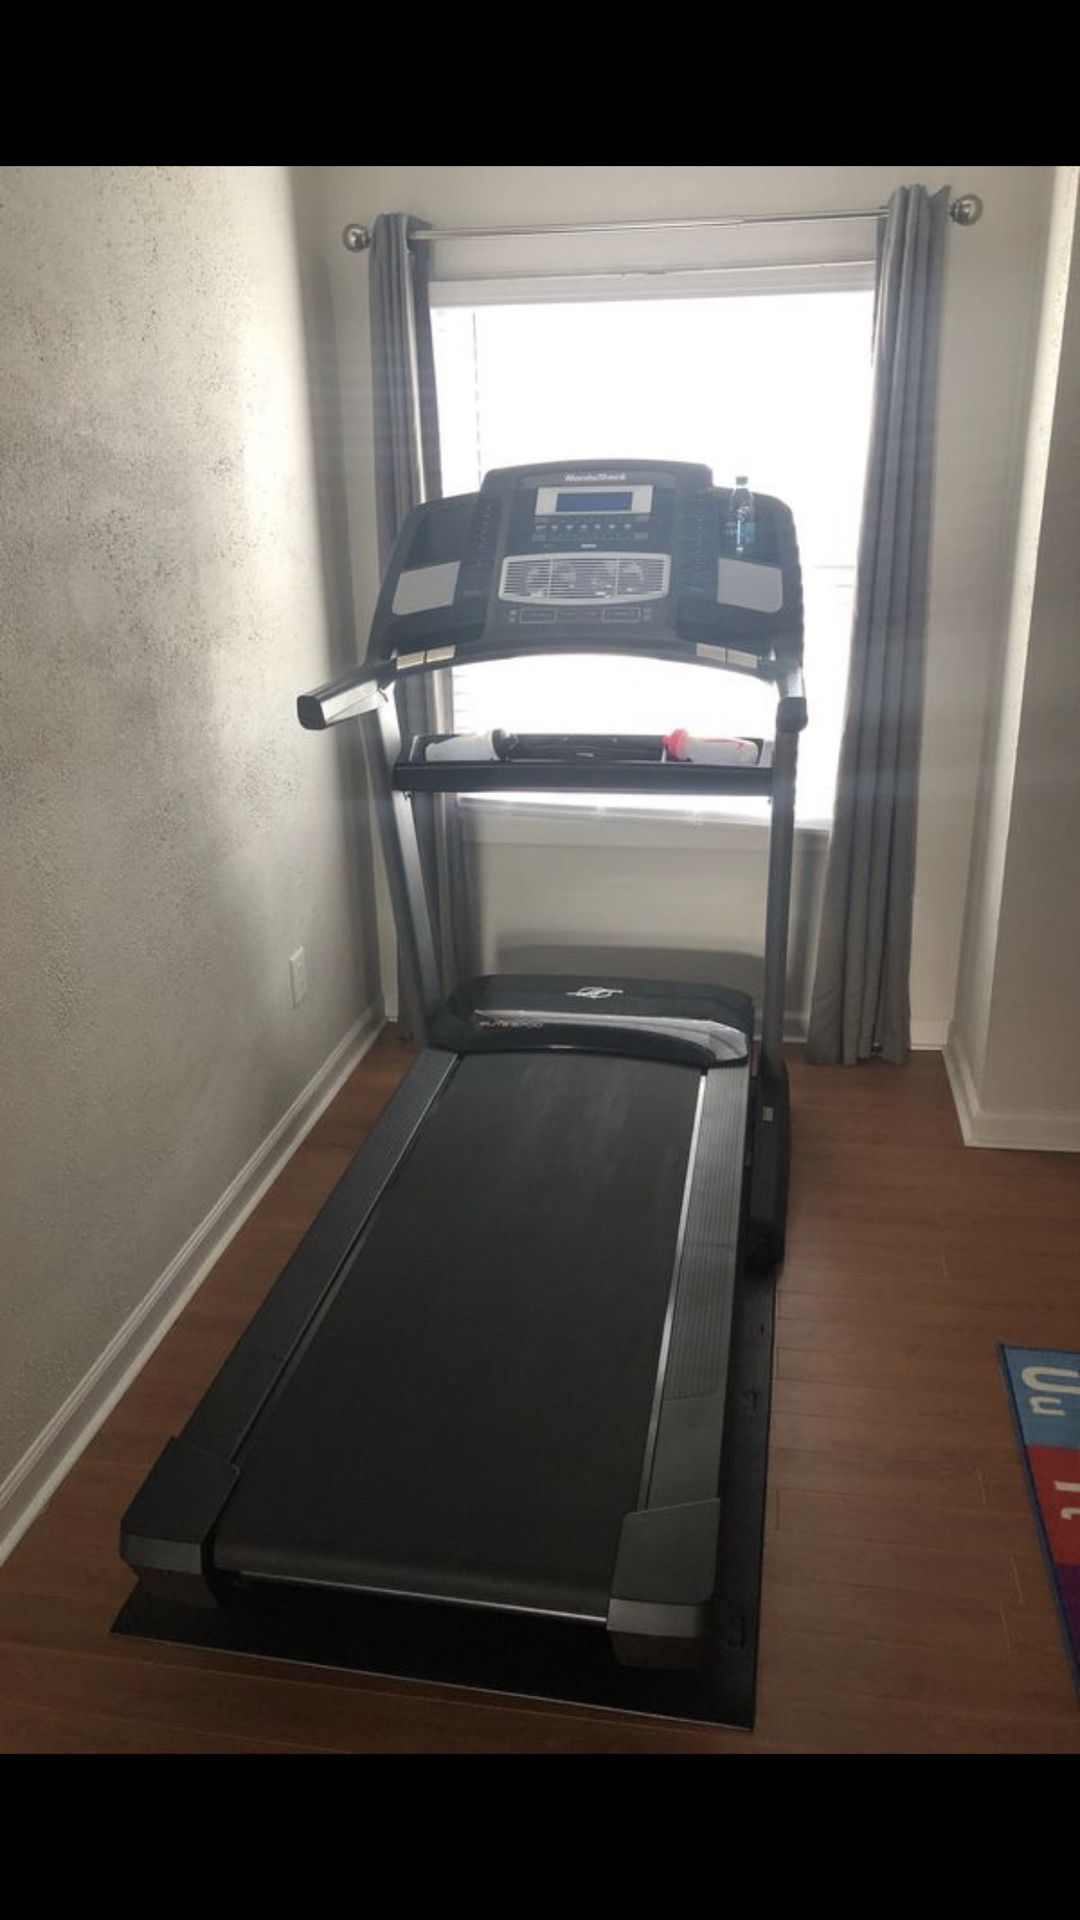 NordicTrack 3700 Series Treadmill